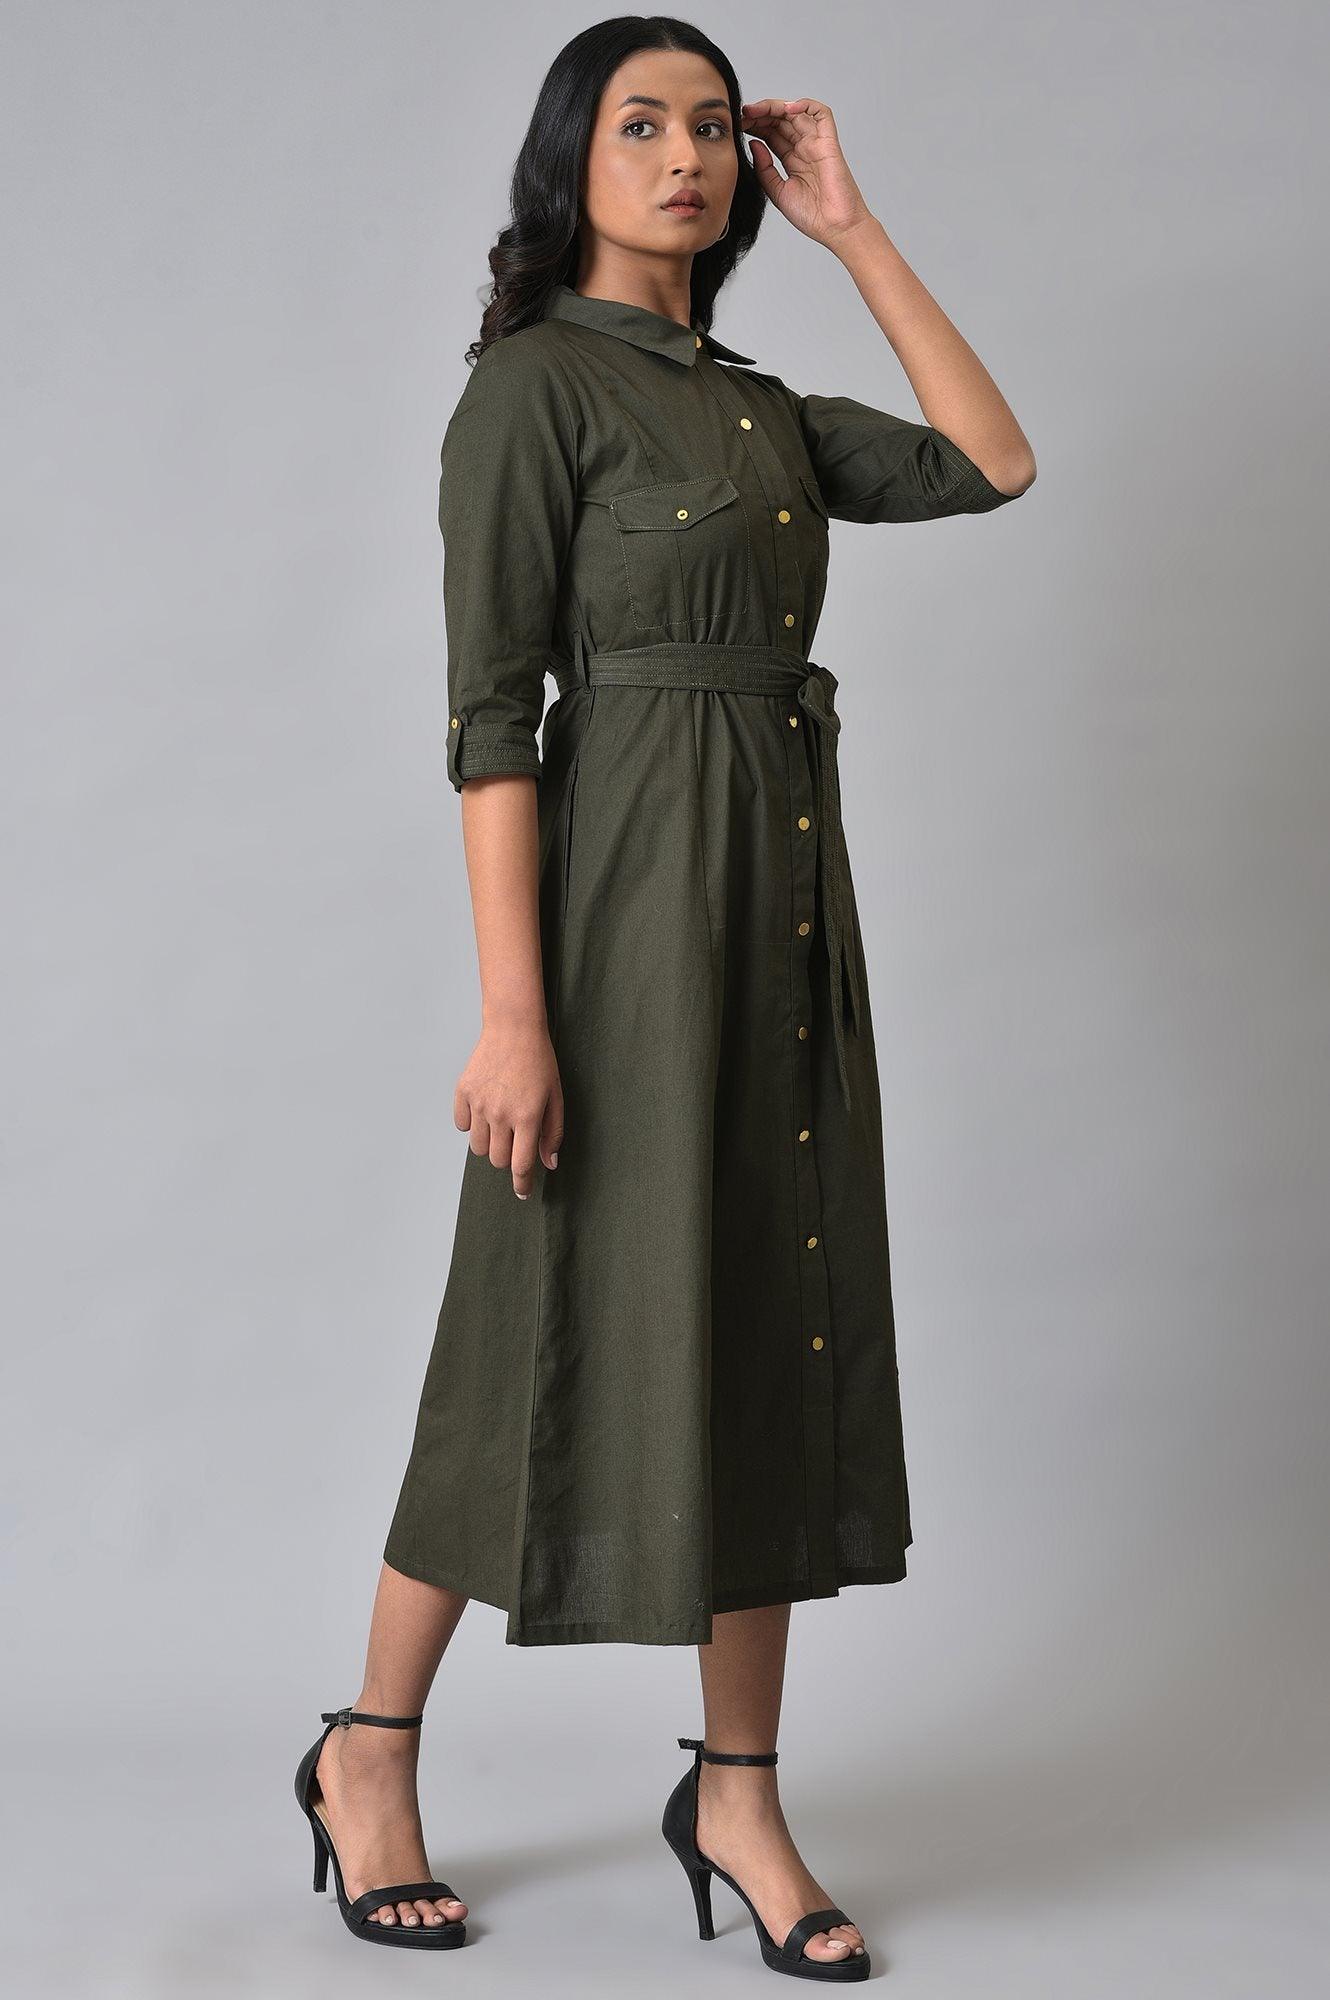 Olive Green Western Dress With Belt - wforwoman